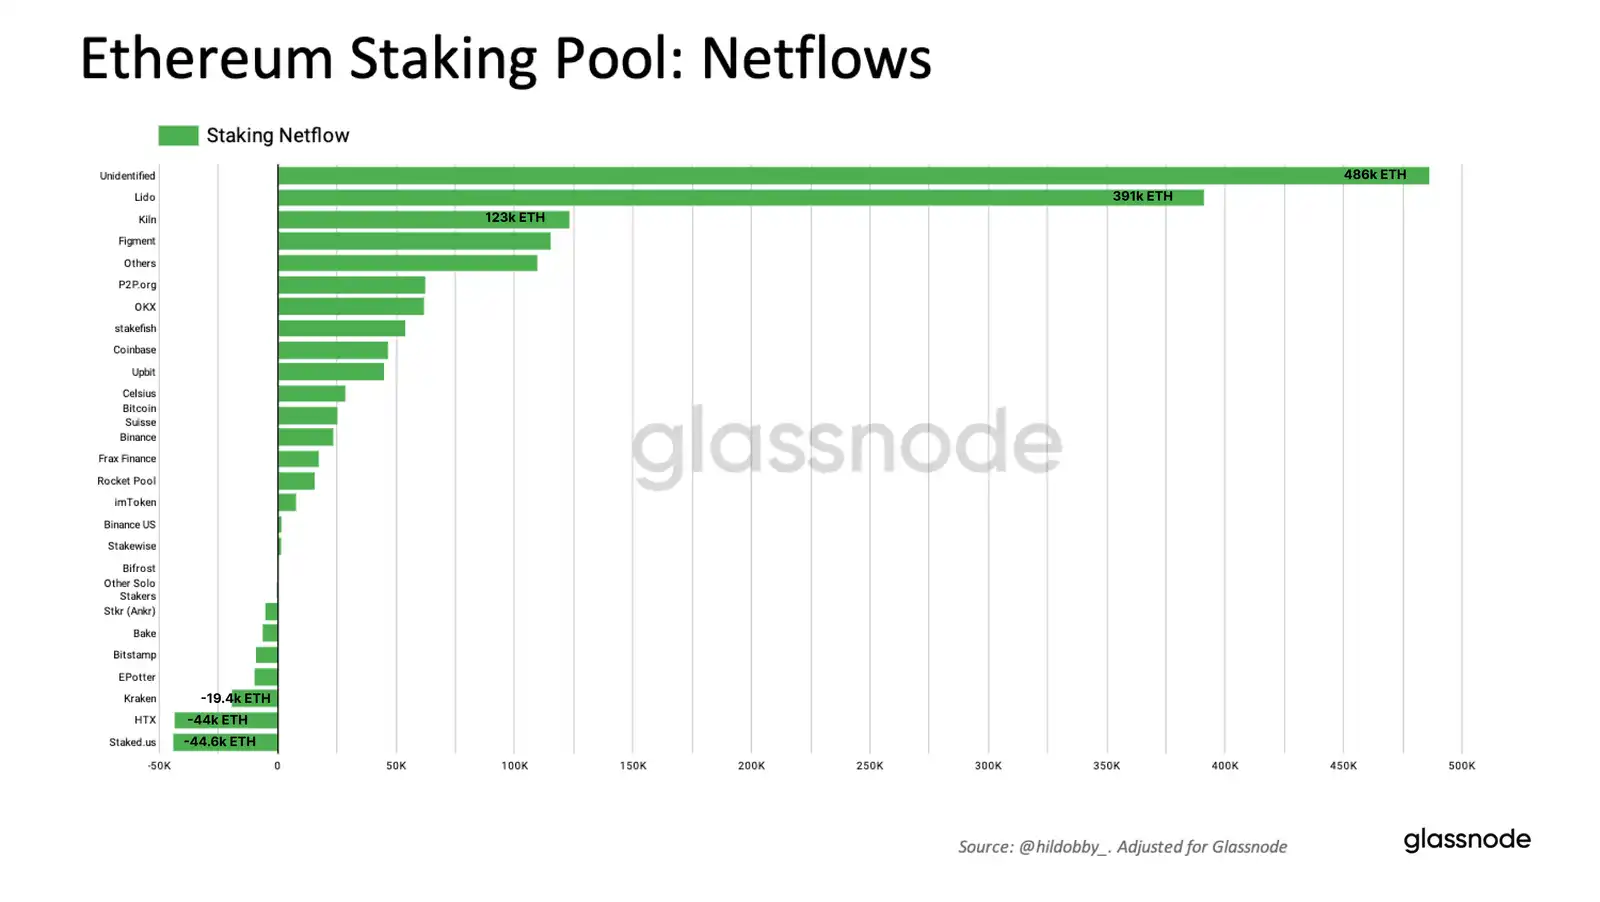 Glassnode: Ethereum pledge pool dynamics and market activities